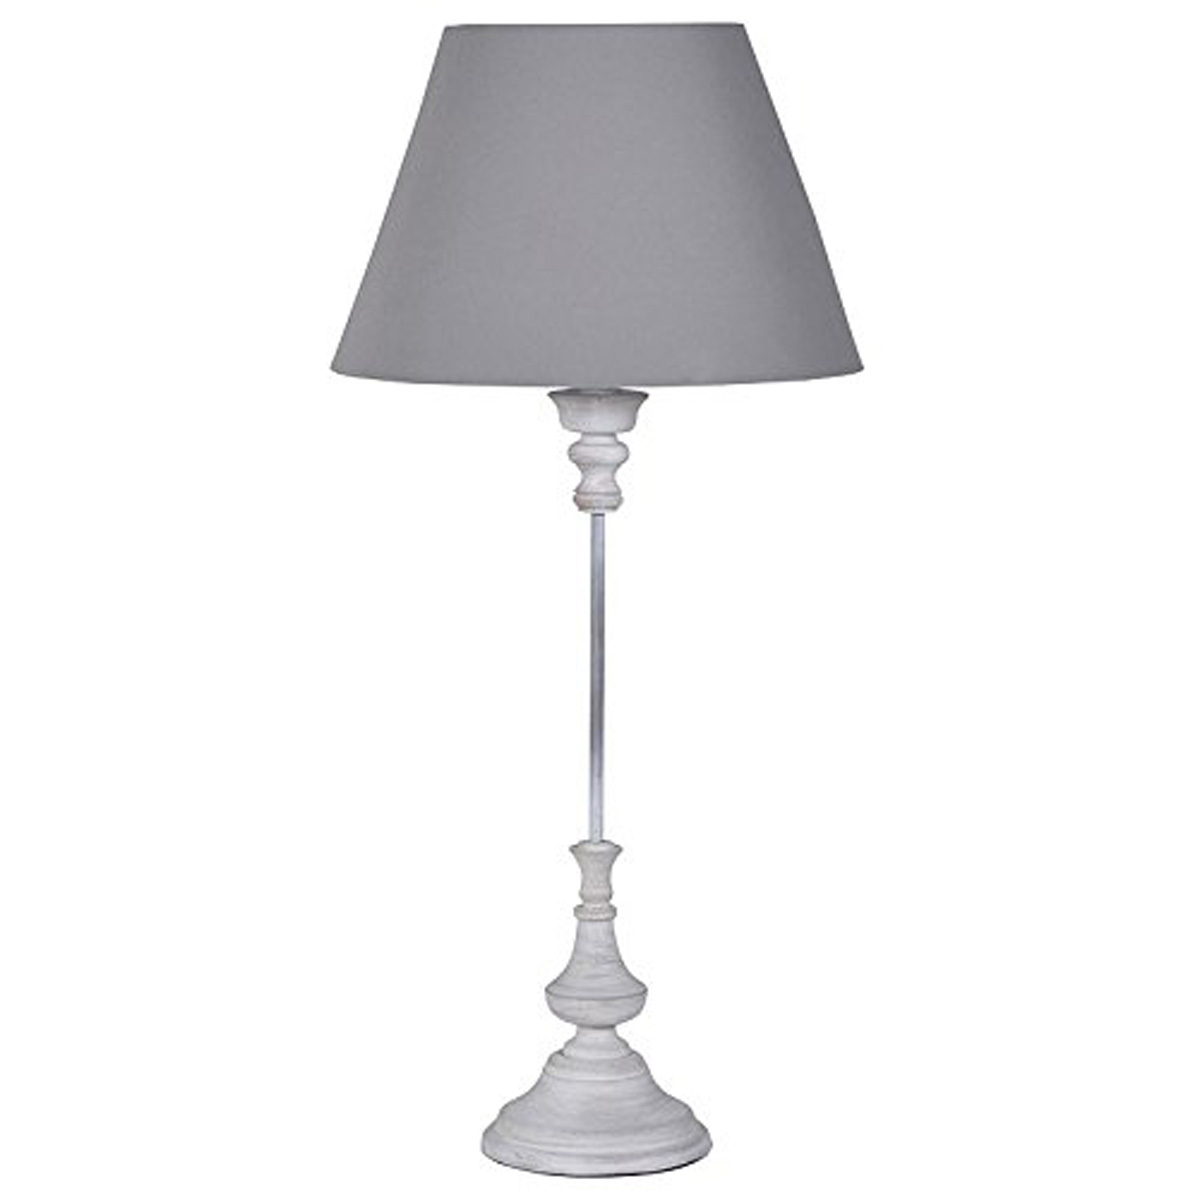 Tall Elegant Grey Table Lamp Interior, Tall Table Lamp With Narrow Shade